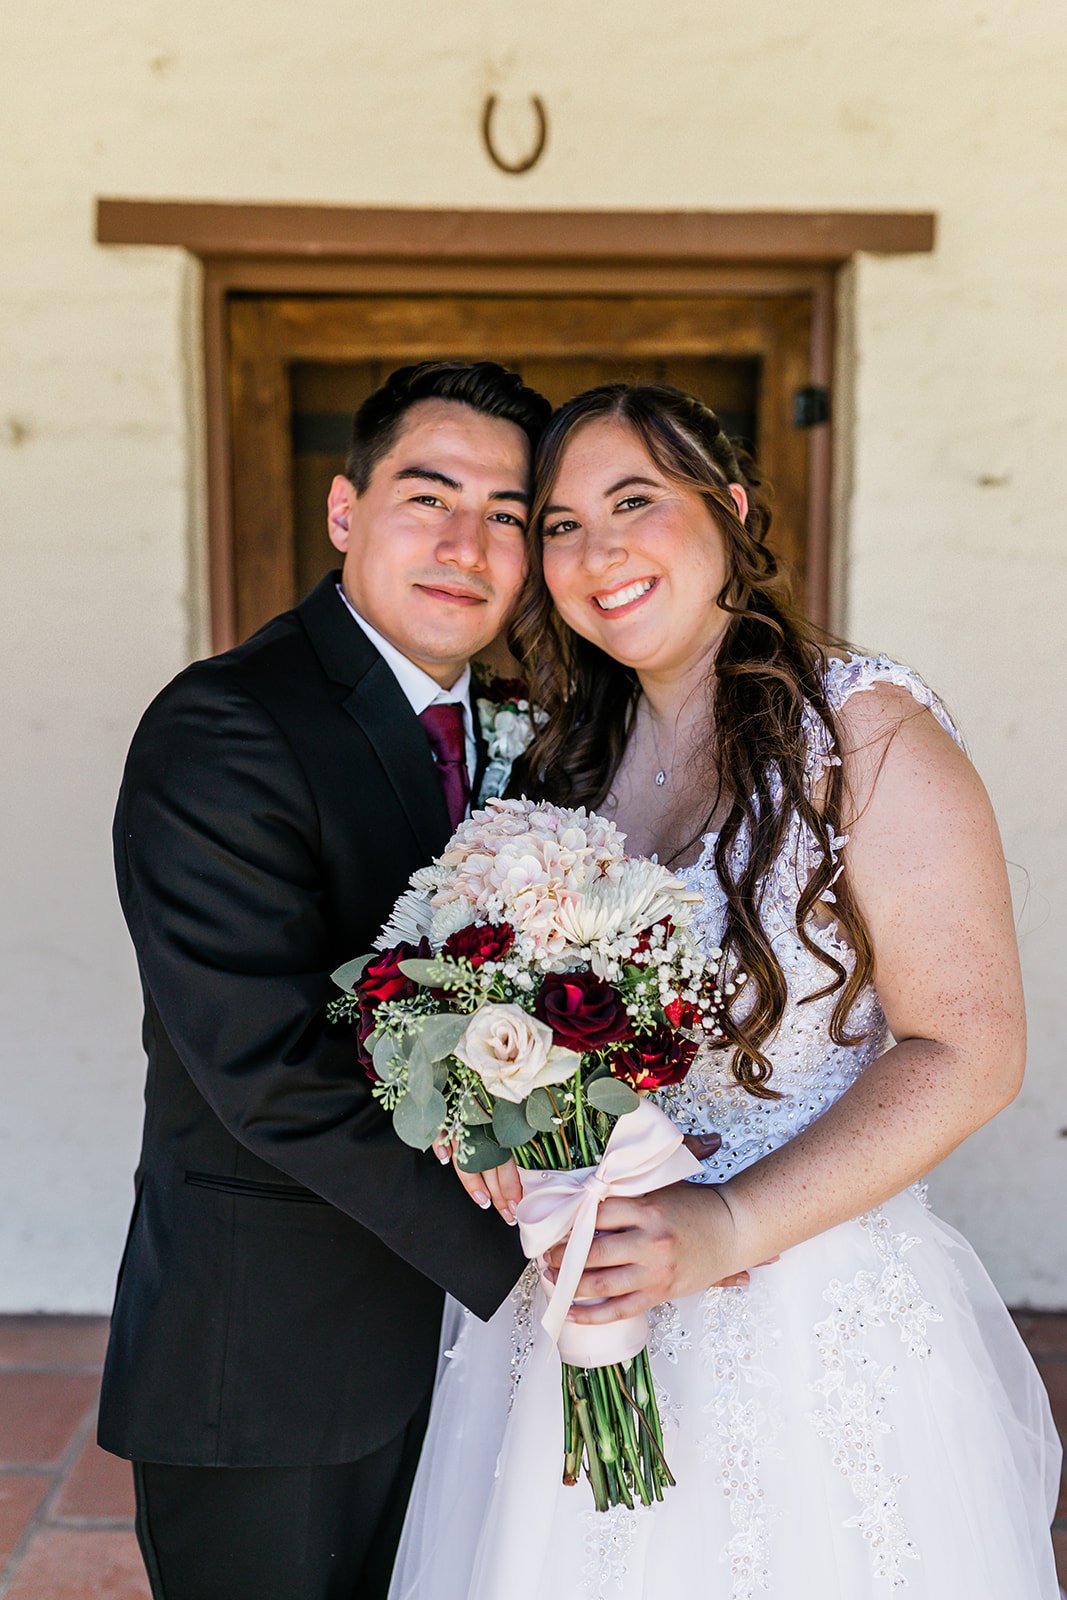 Wedding day portraits at Tesoro Adobe Historic Park in Santa Clarita